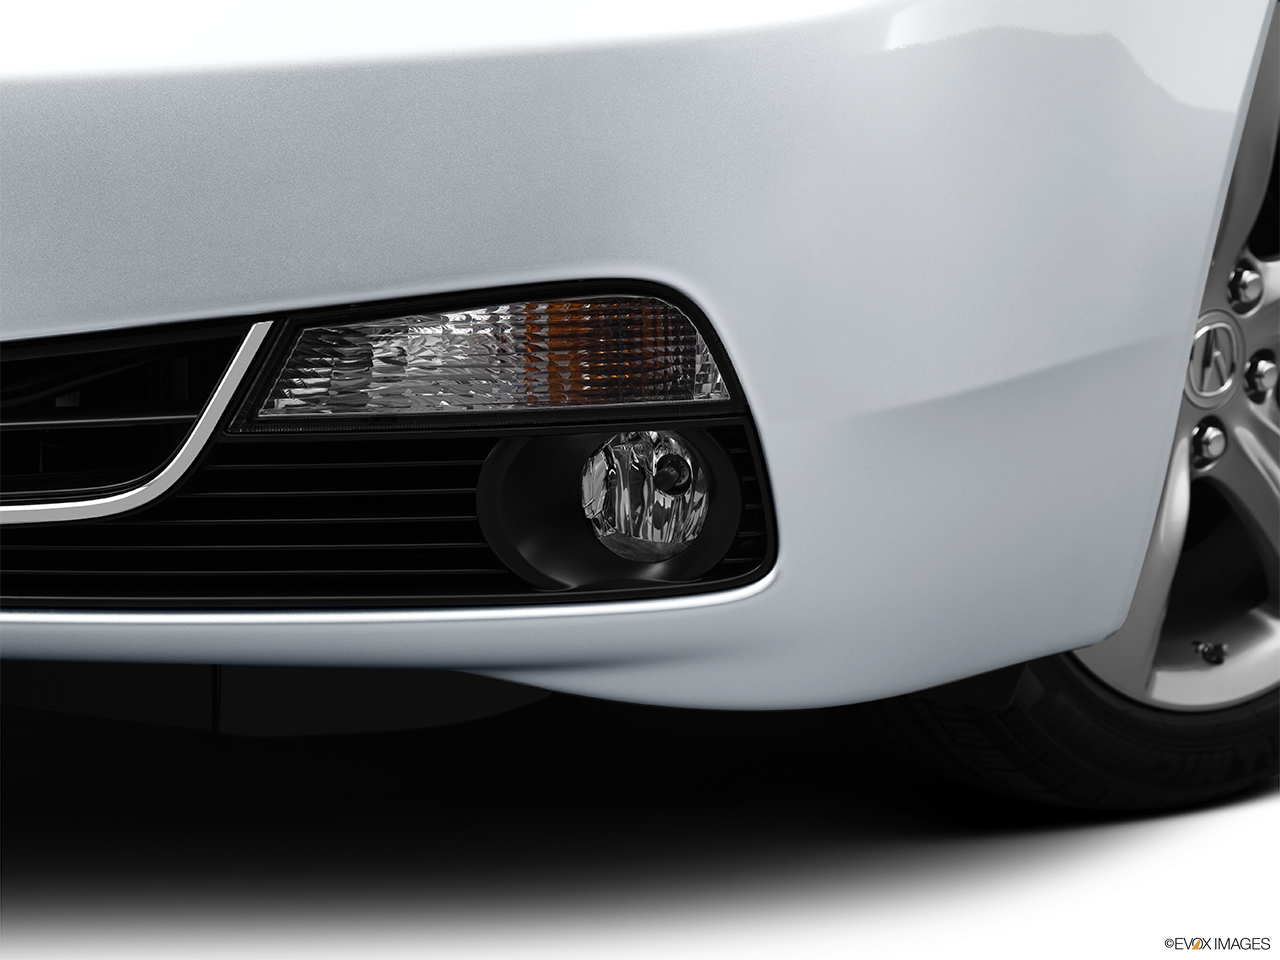 2013 Acura TL SH-AWD Driver's side fog lamp. 